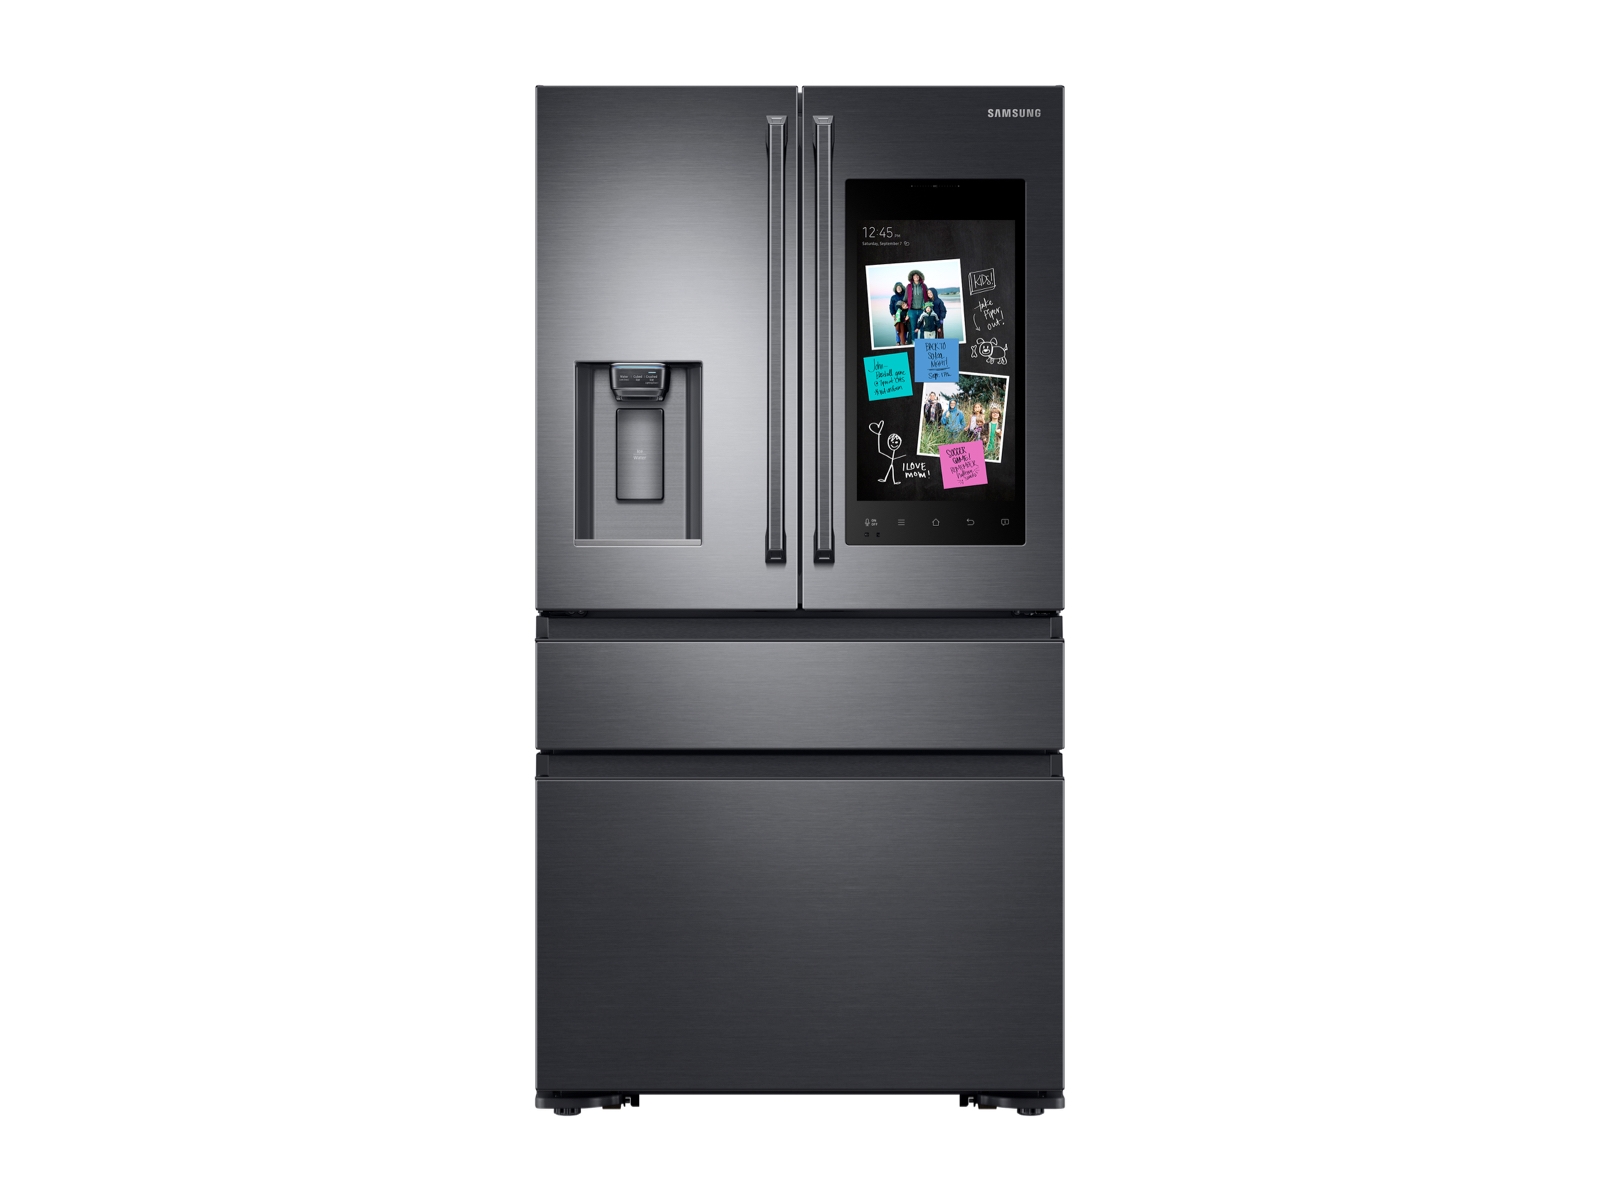 Samsung 22 cu. ft. Family Hub Counter Depth 4-Door French Door Refrigerator in Black Stainless Steel, Fingerprint Resistant Black Stainless Steel